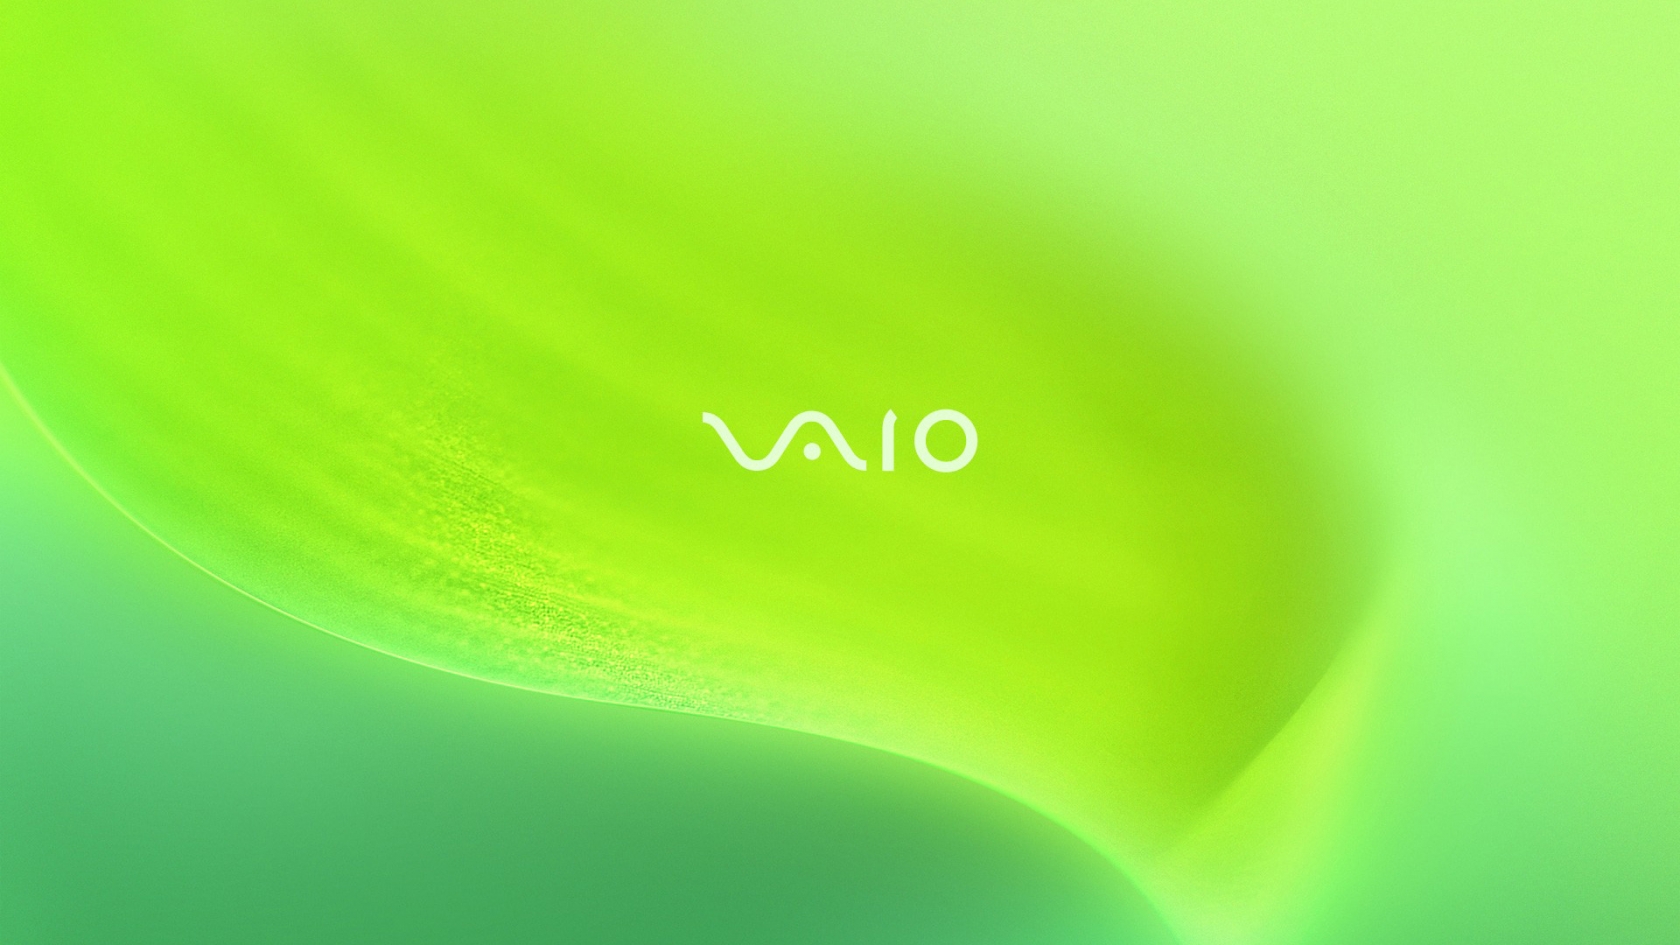 Vaio Green Leaf for 1680 x 945 HDTV resolution